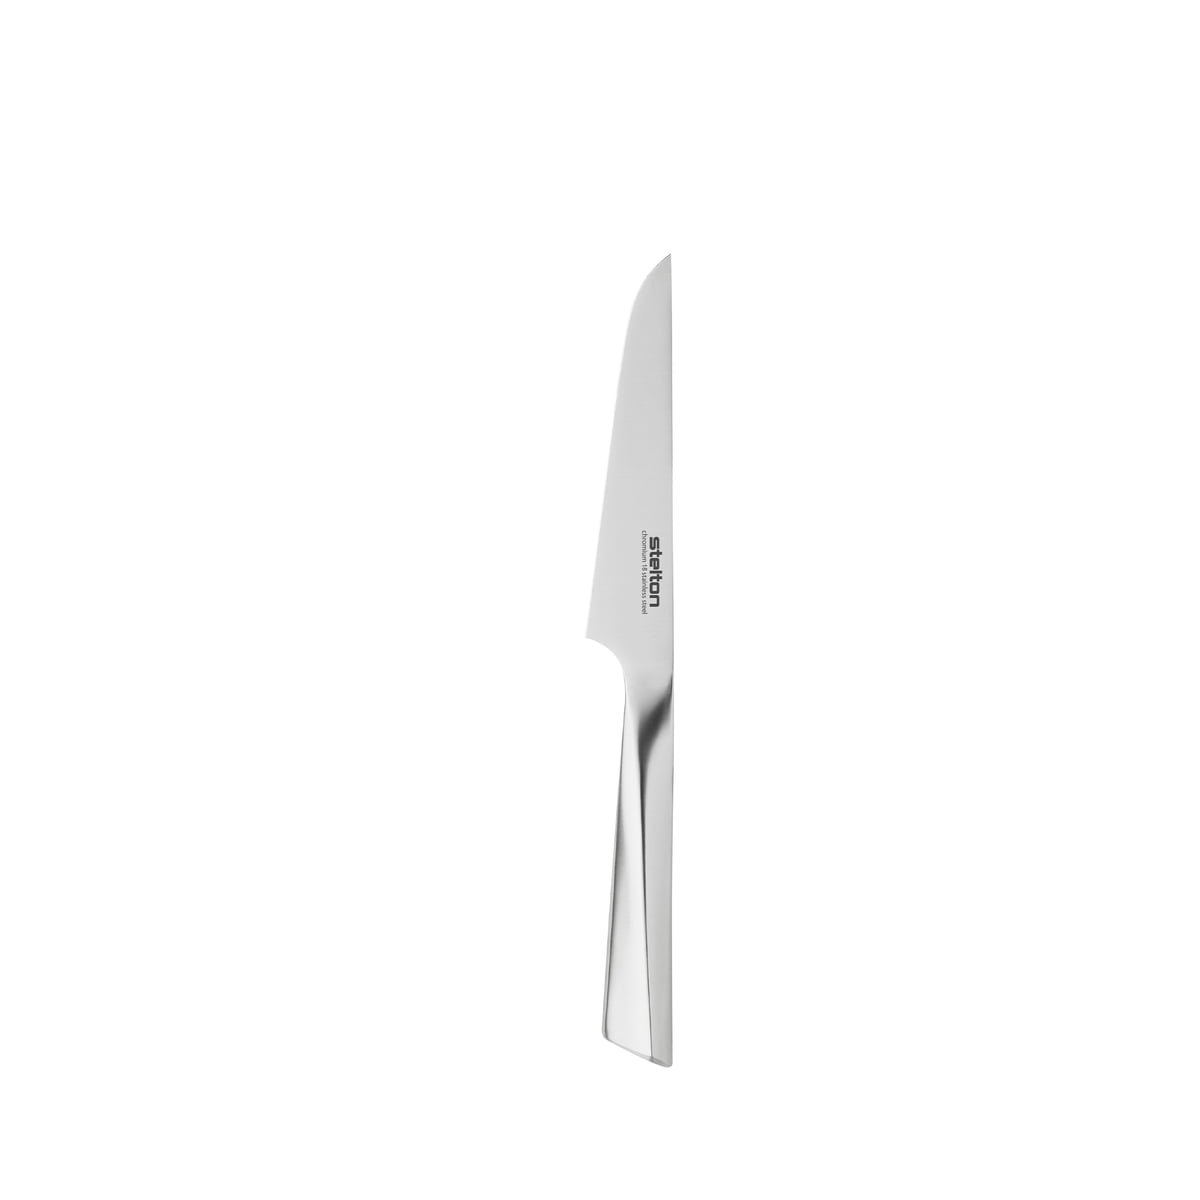 Tasty 15 Piece Stainless Steel Block Knife Cutlery Set, Multicolor